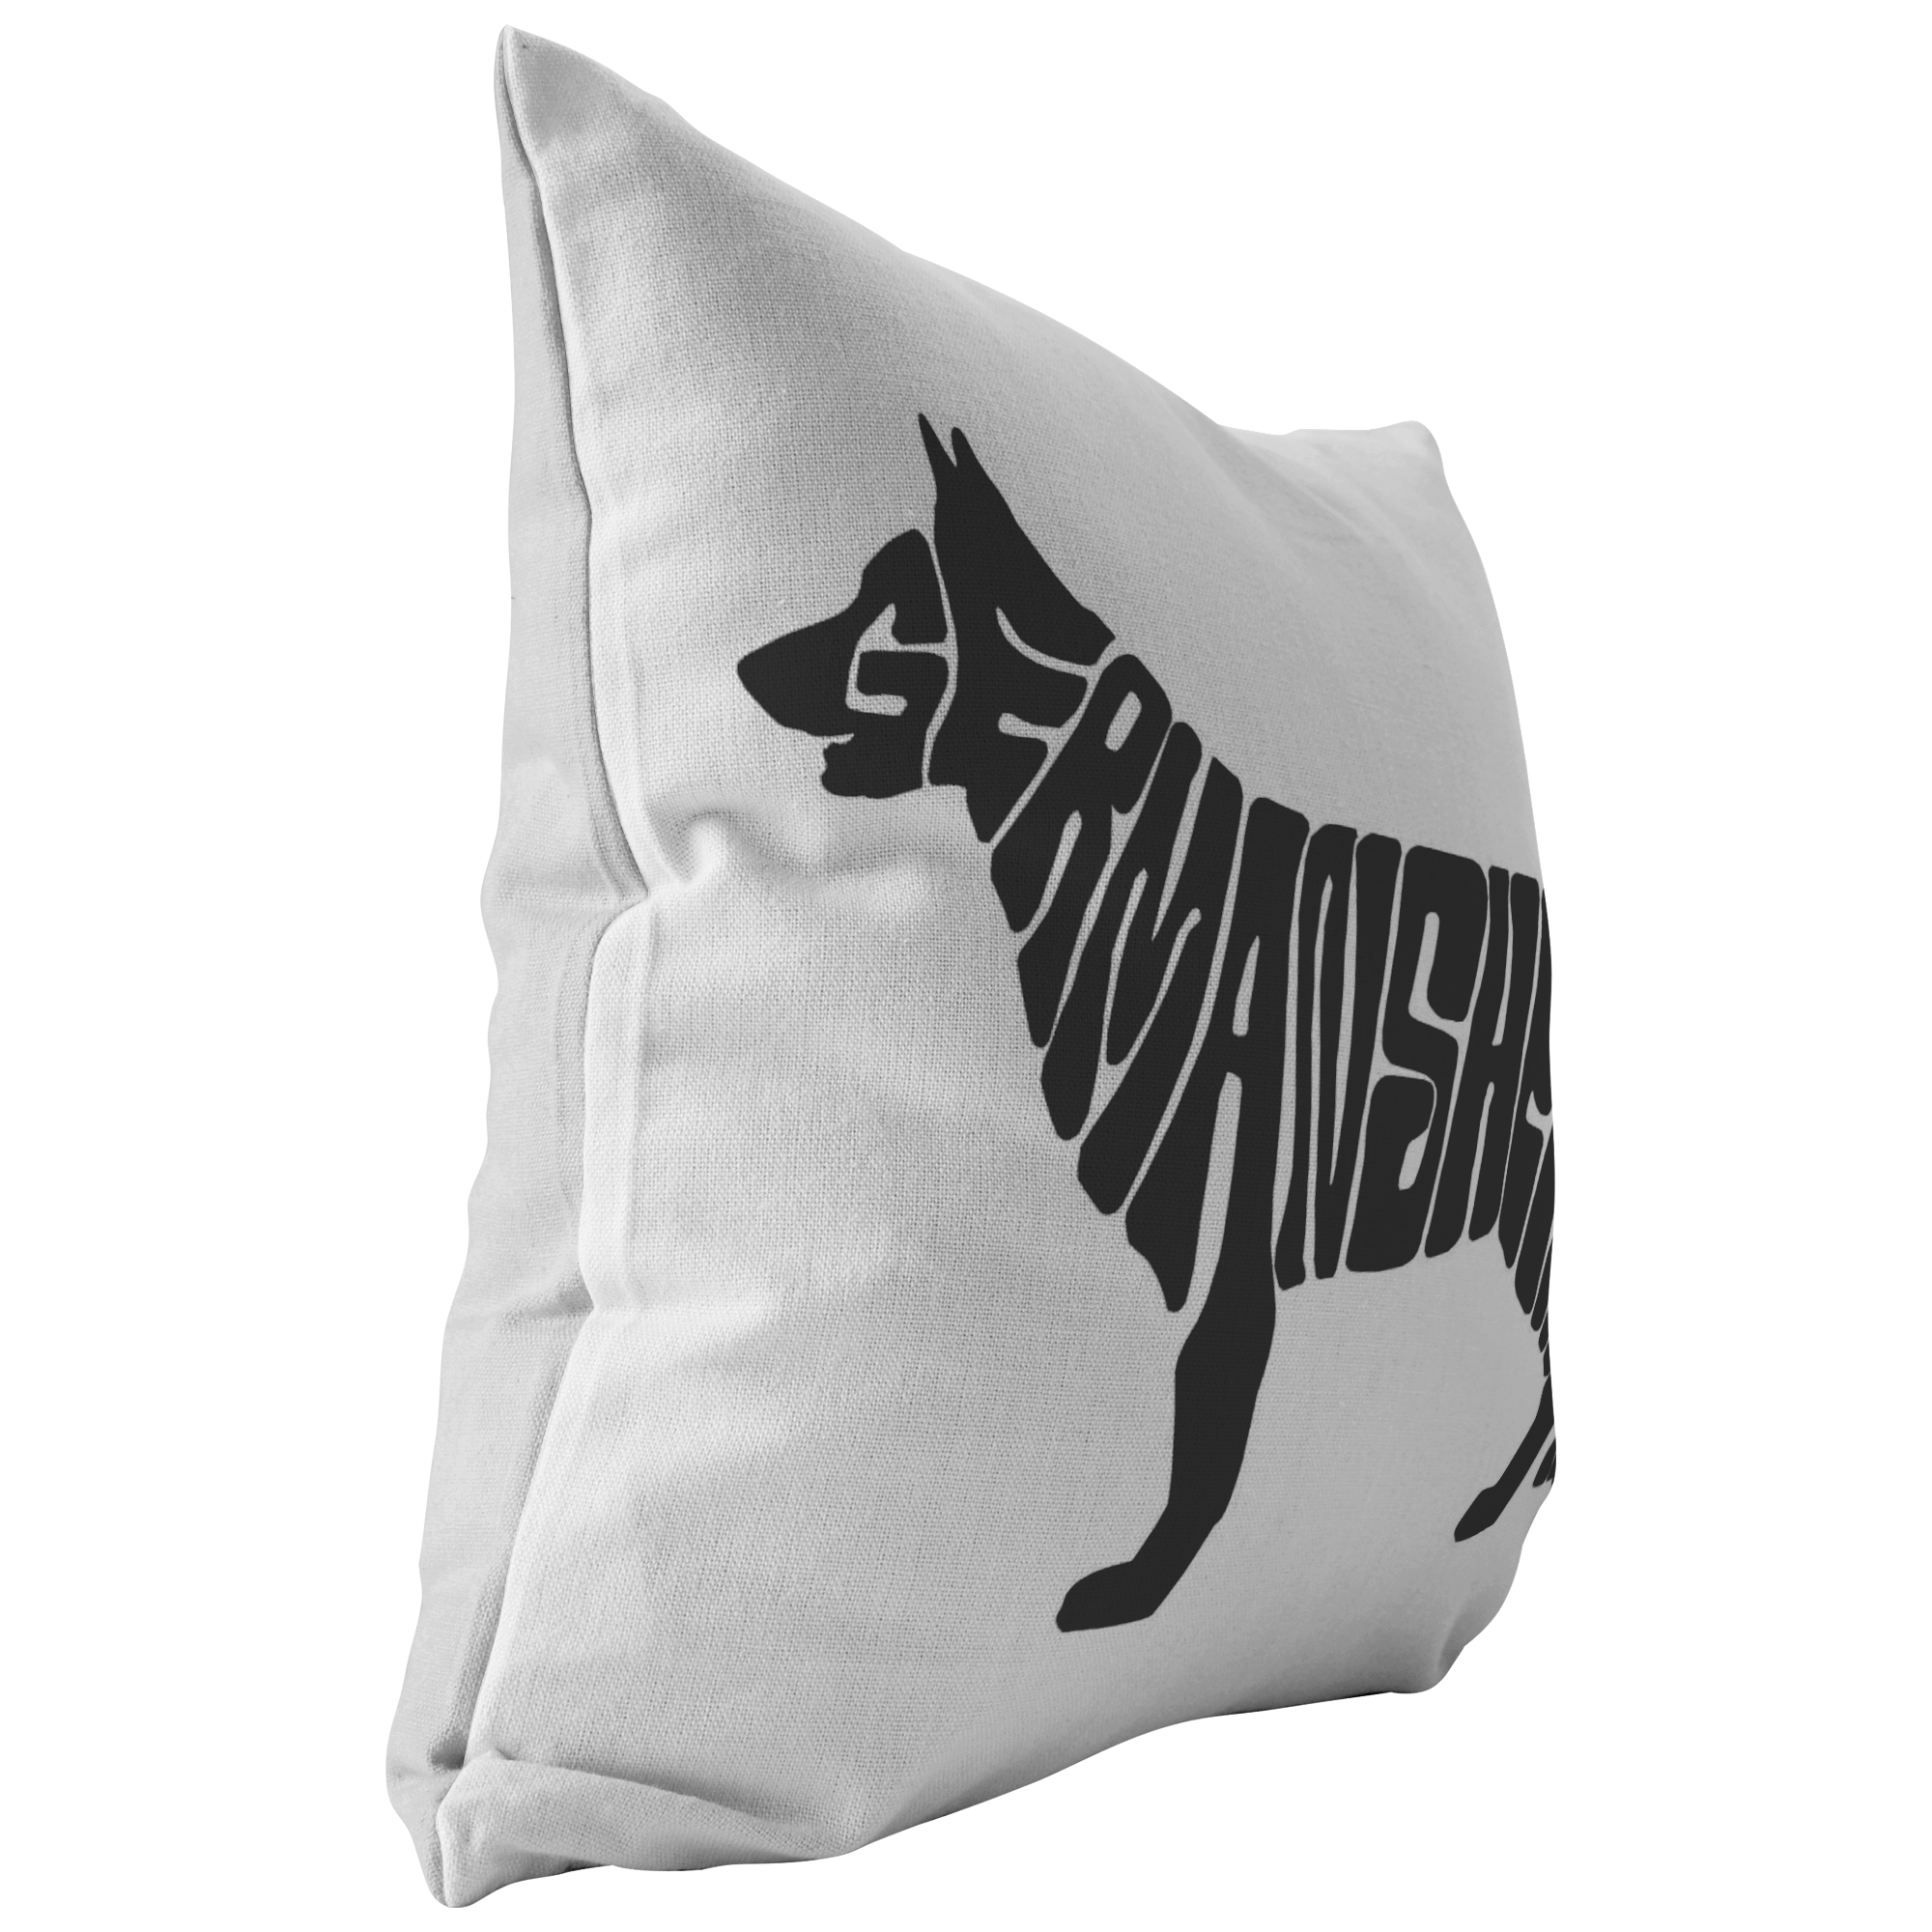 German Shepherd - Pillow